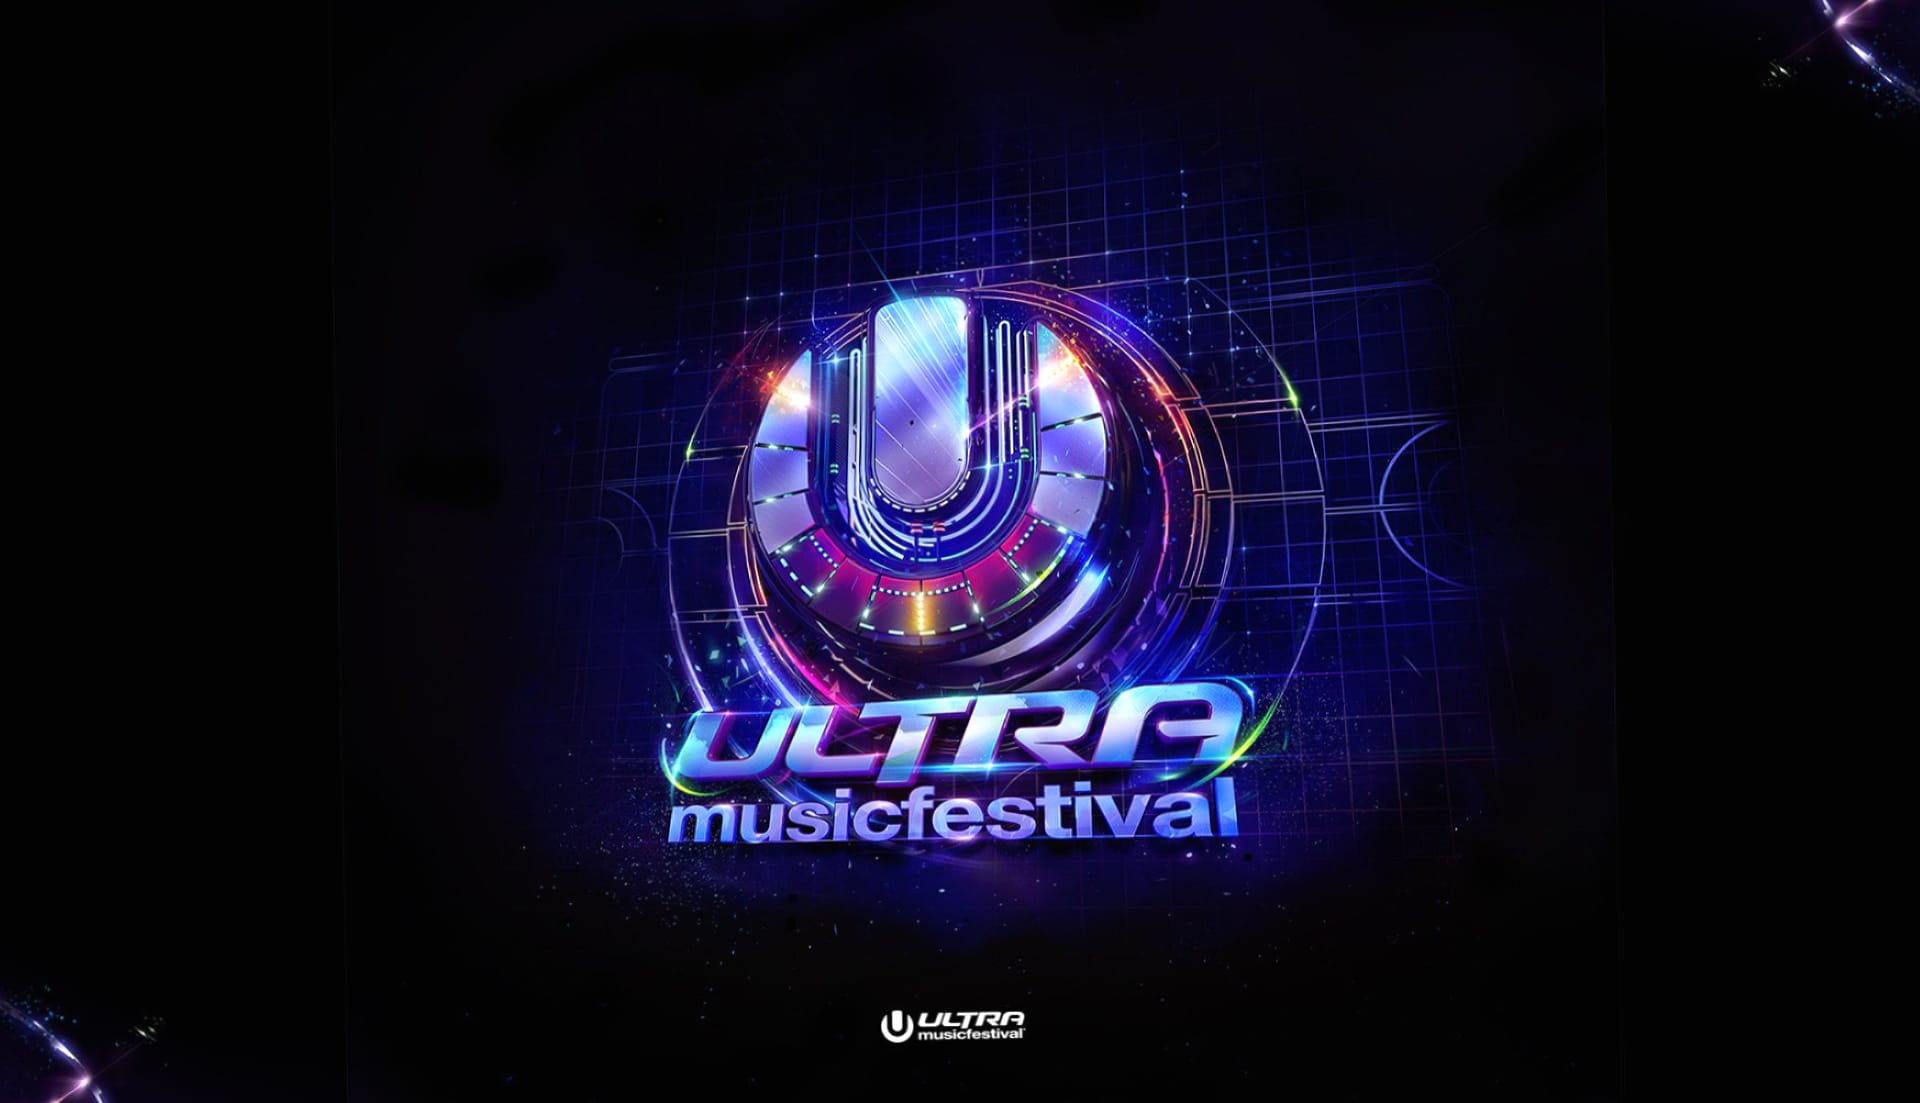 Ultra Music Festival 2048 x 2048 iPad wallpaper download